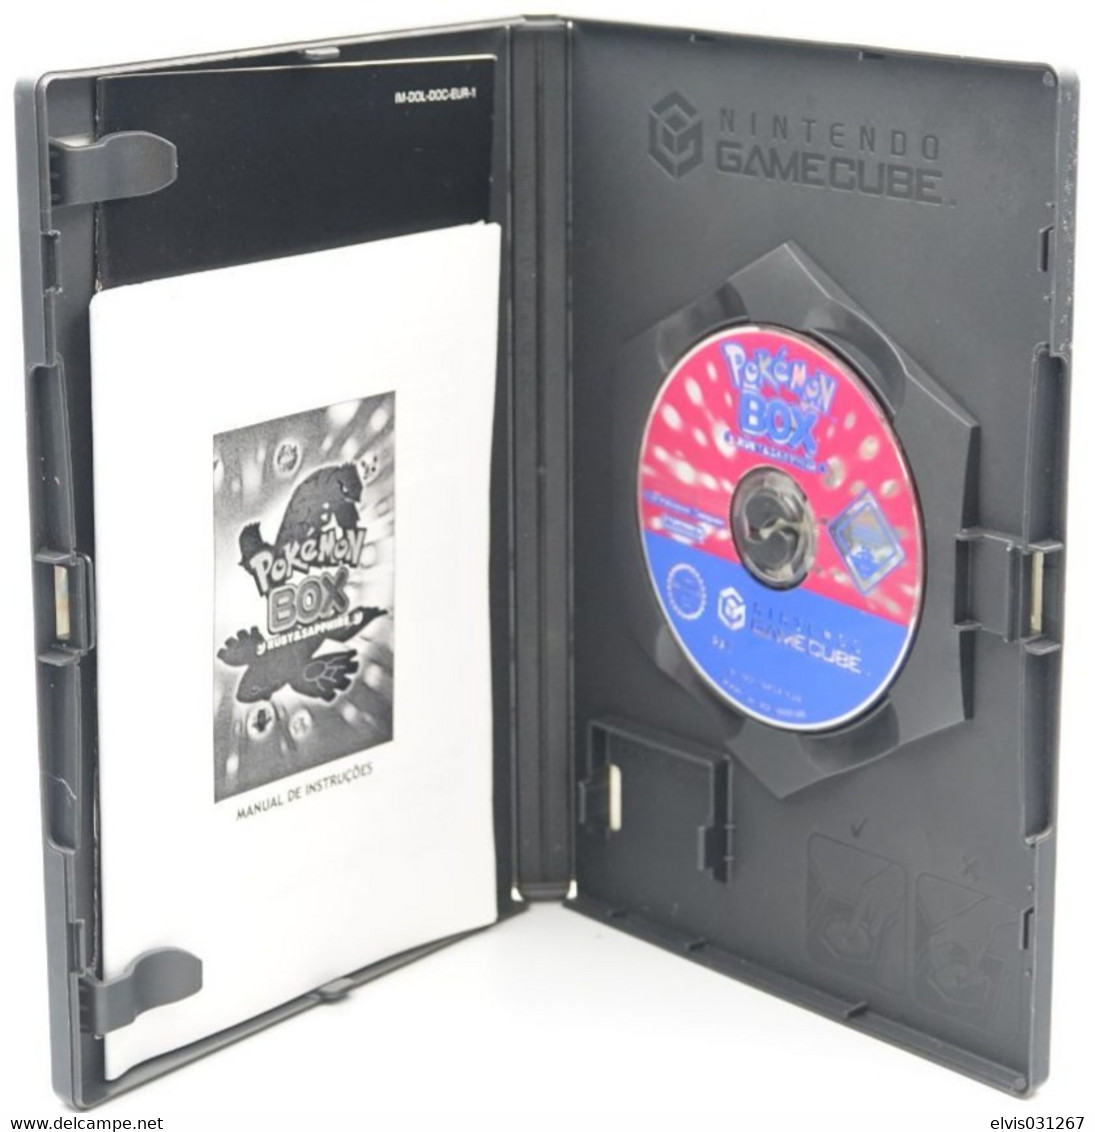 NINTENDO GAMECUBE : POKÉMON BOX RUBY & SAPPHIRE HOLY GRAIL IN BOX - Game - Nintendo GameCube